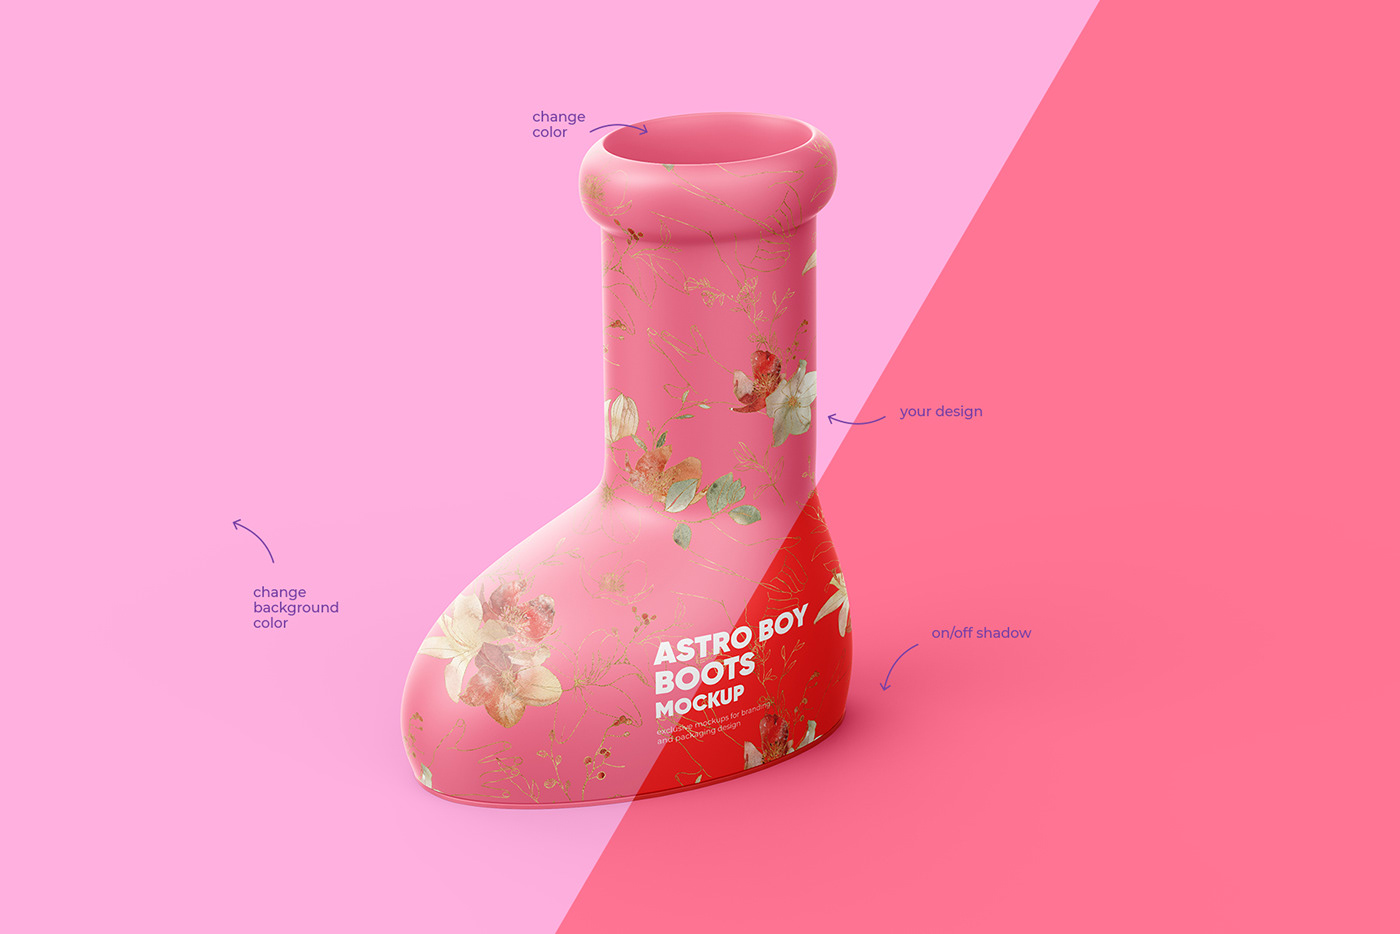 Astroboy astroboyboots boots Brand Design branding  design Mockup mschf template visual identity